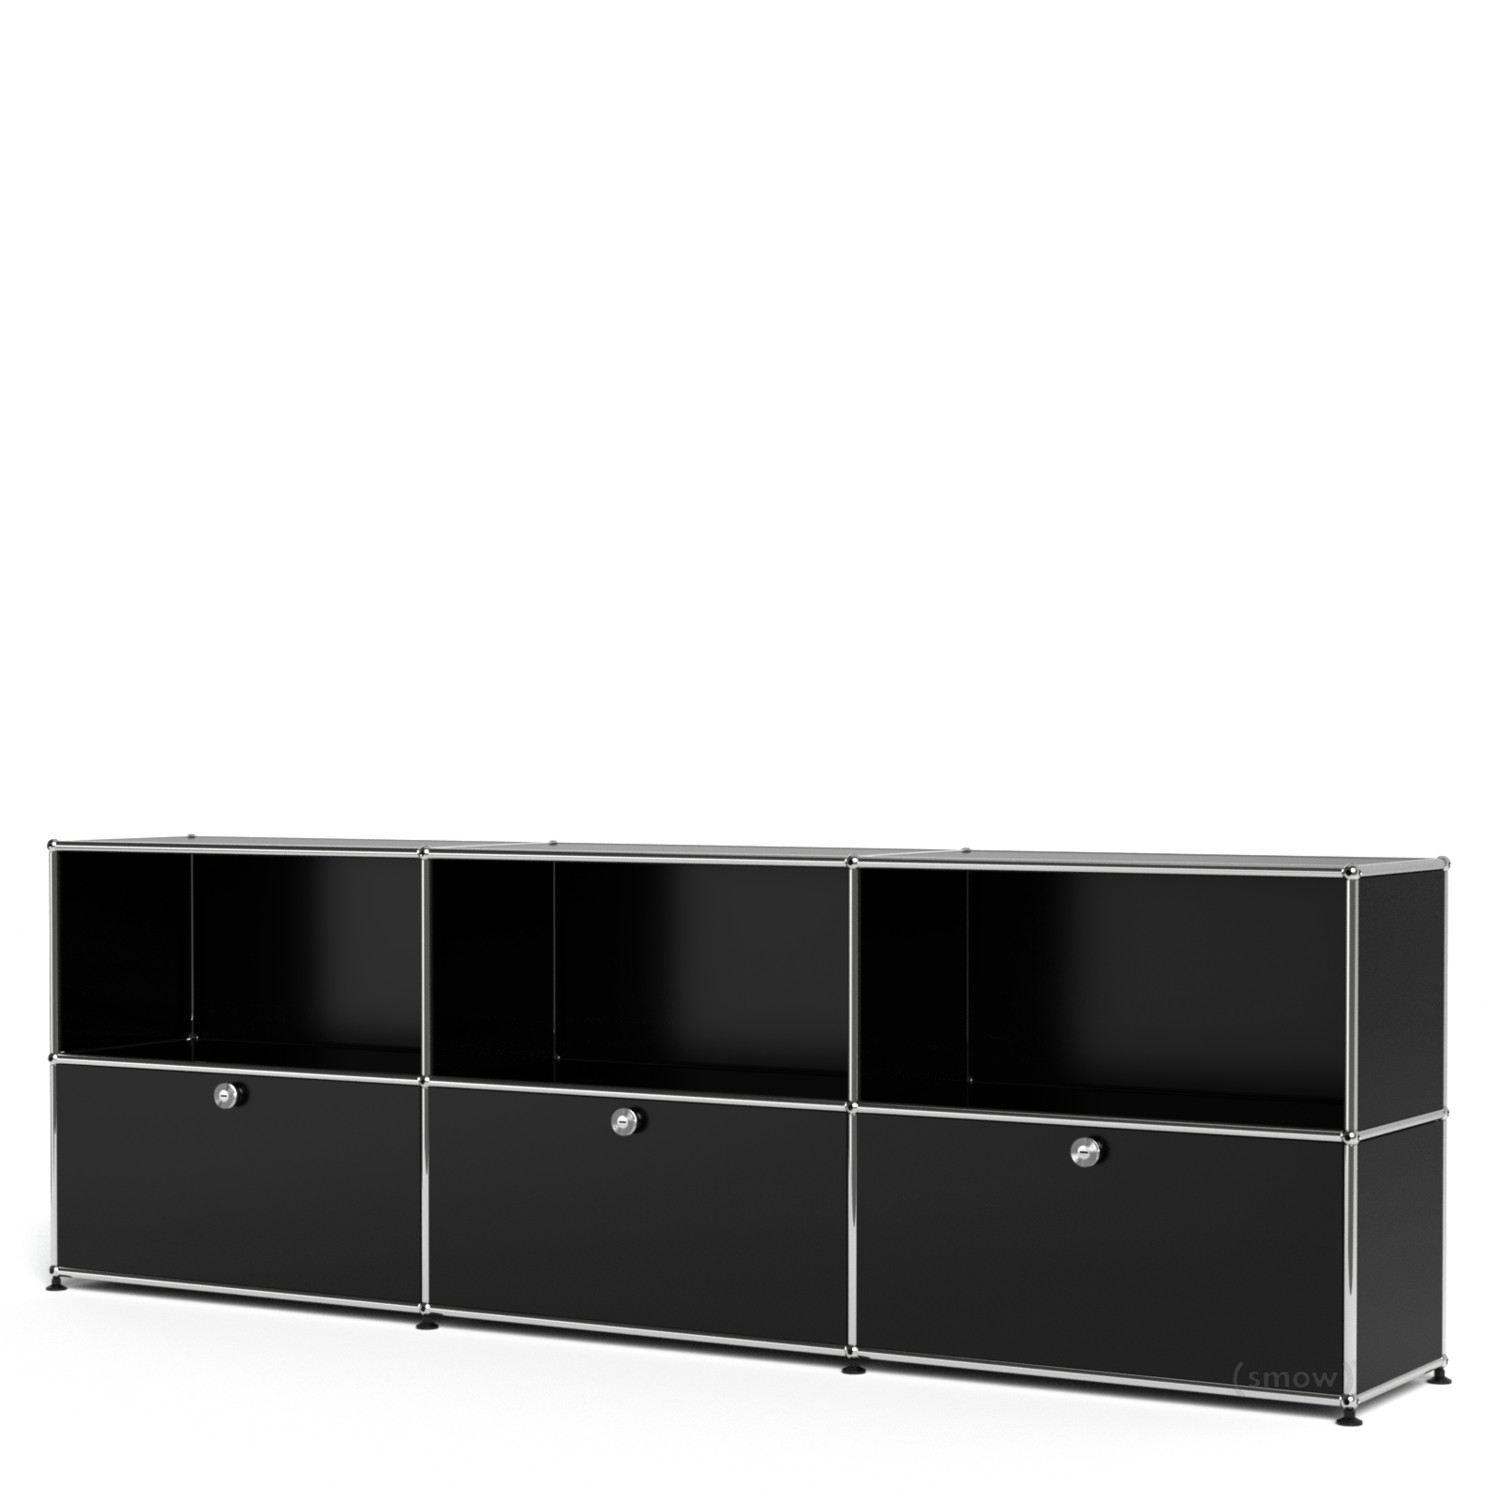 USM Haller Sideboard XL, Customisable, Graphite black RAL 9011, Open, With  3 drop-down doors by Fritz Haller & Paul Schärer - Designer furniture by  smow.com